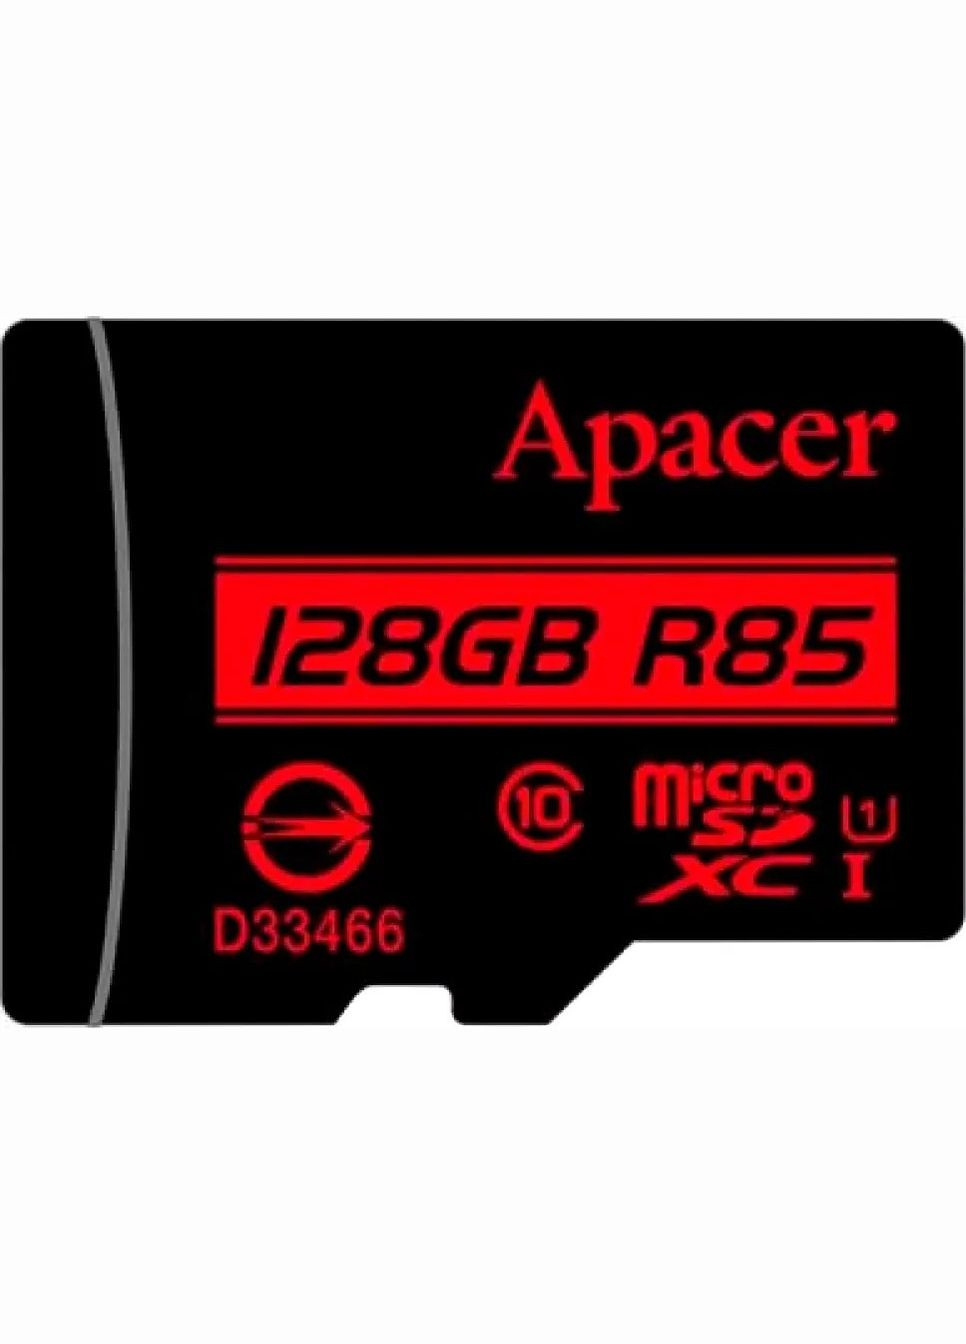 Картка пам'яті microSDXC 128Gb Class 10 UHS-1 без адаптера AP128GMCSX10U5-RA Apacer (293345451)